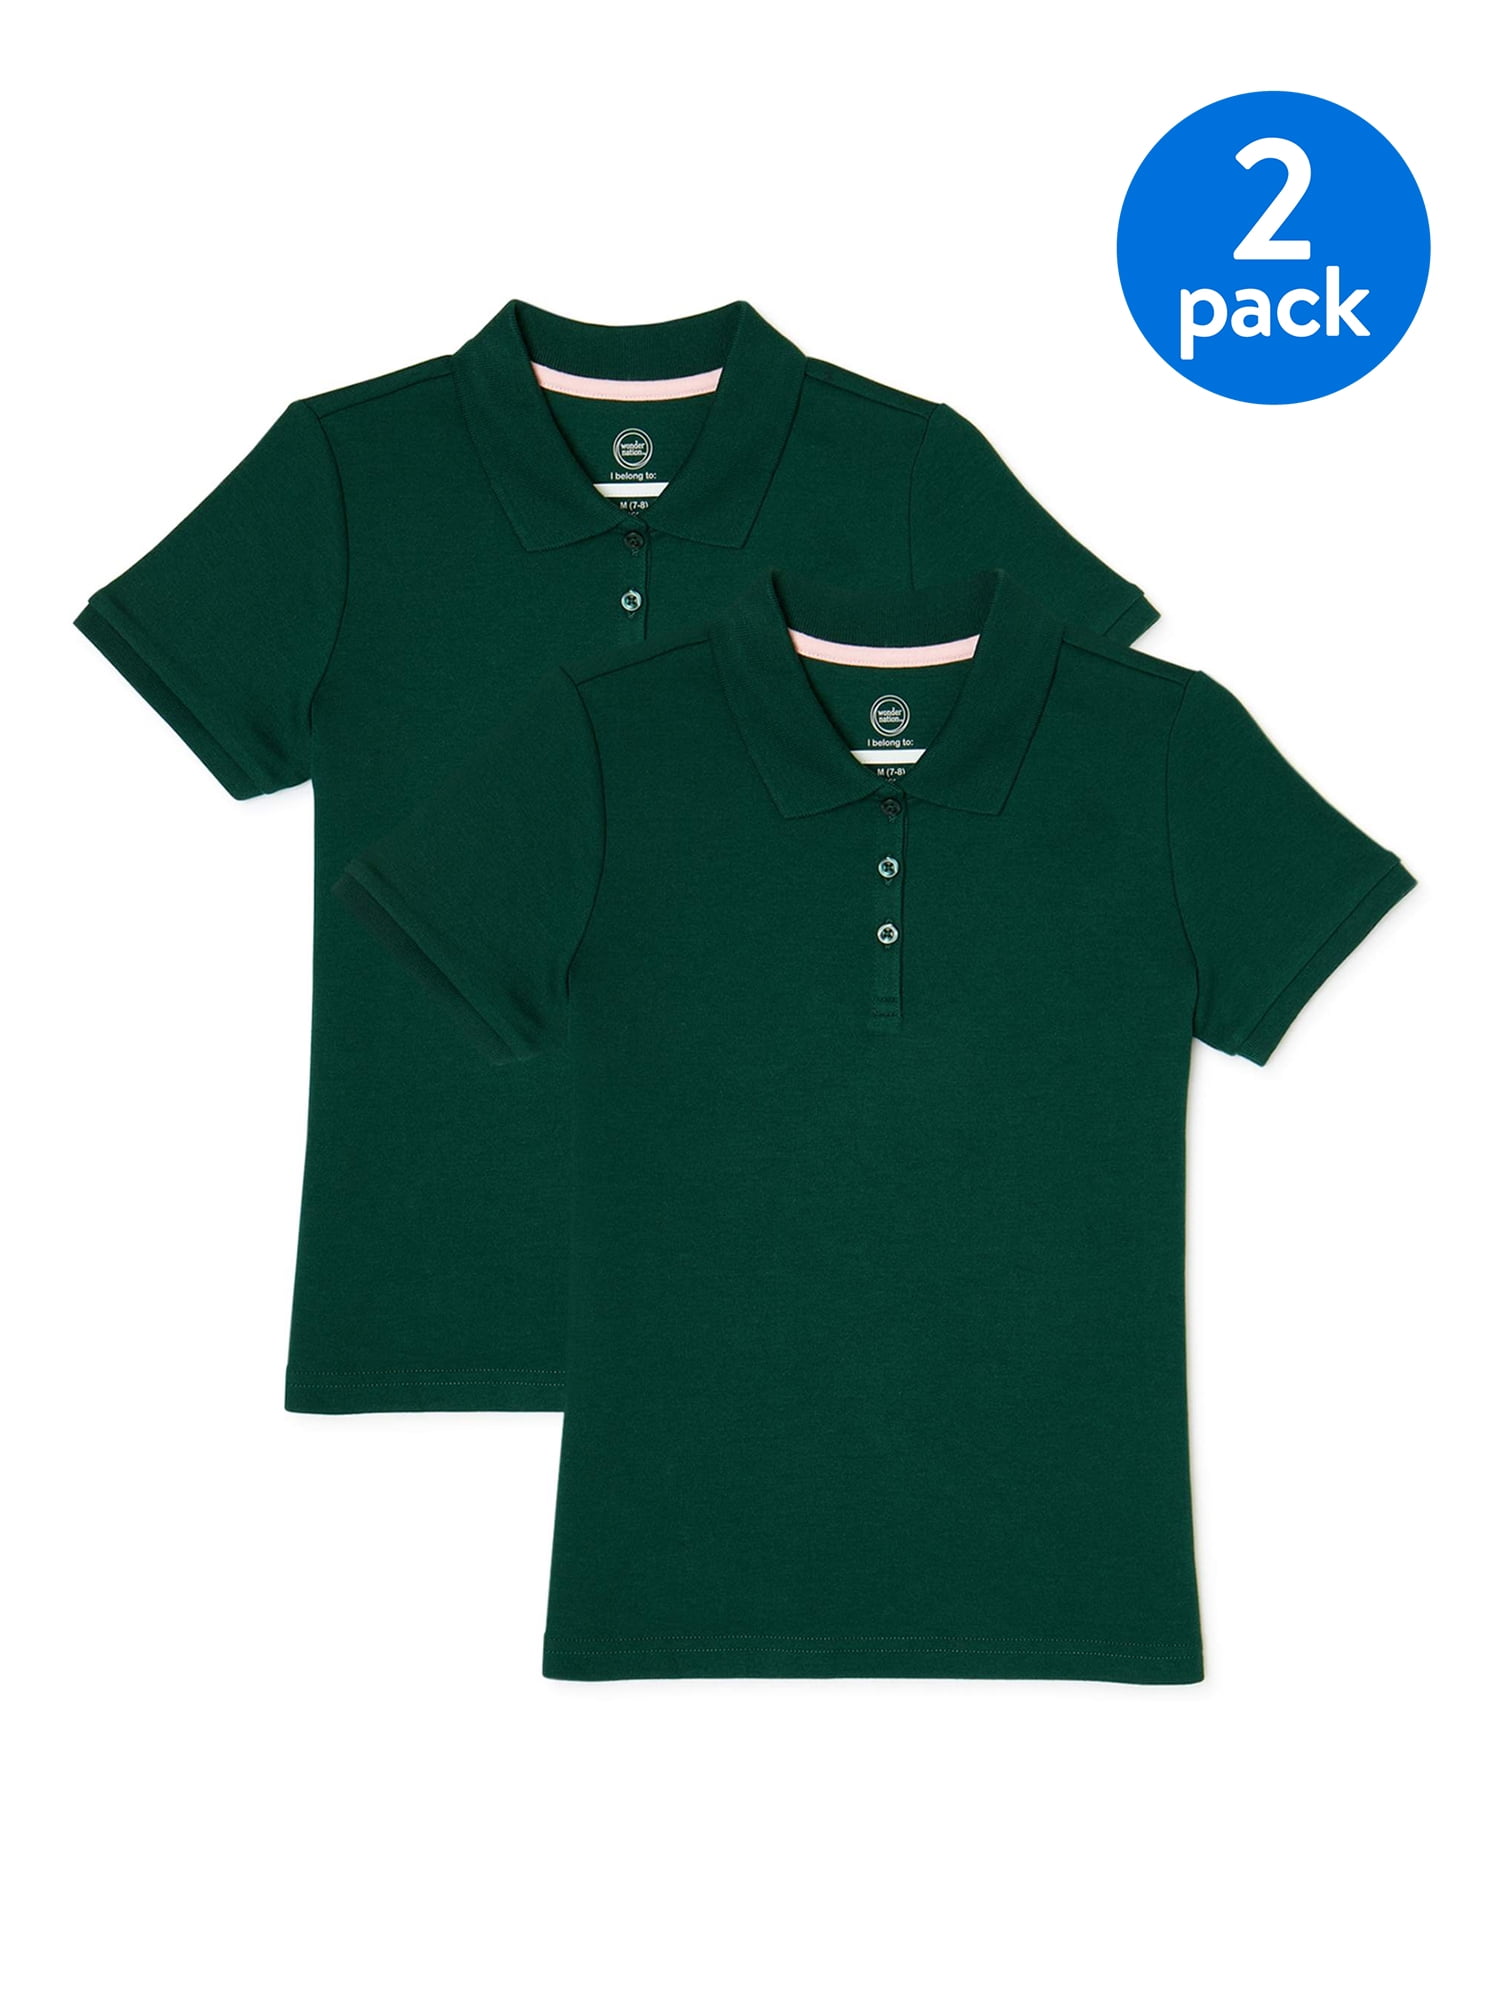 Boys Girls Hunter Green Pique Polo Shirt School Uniform Short Sleeve Size 4 t 18 